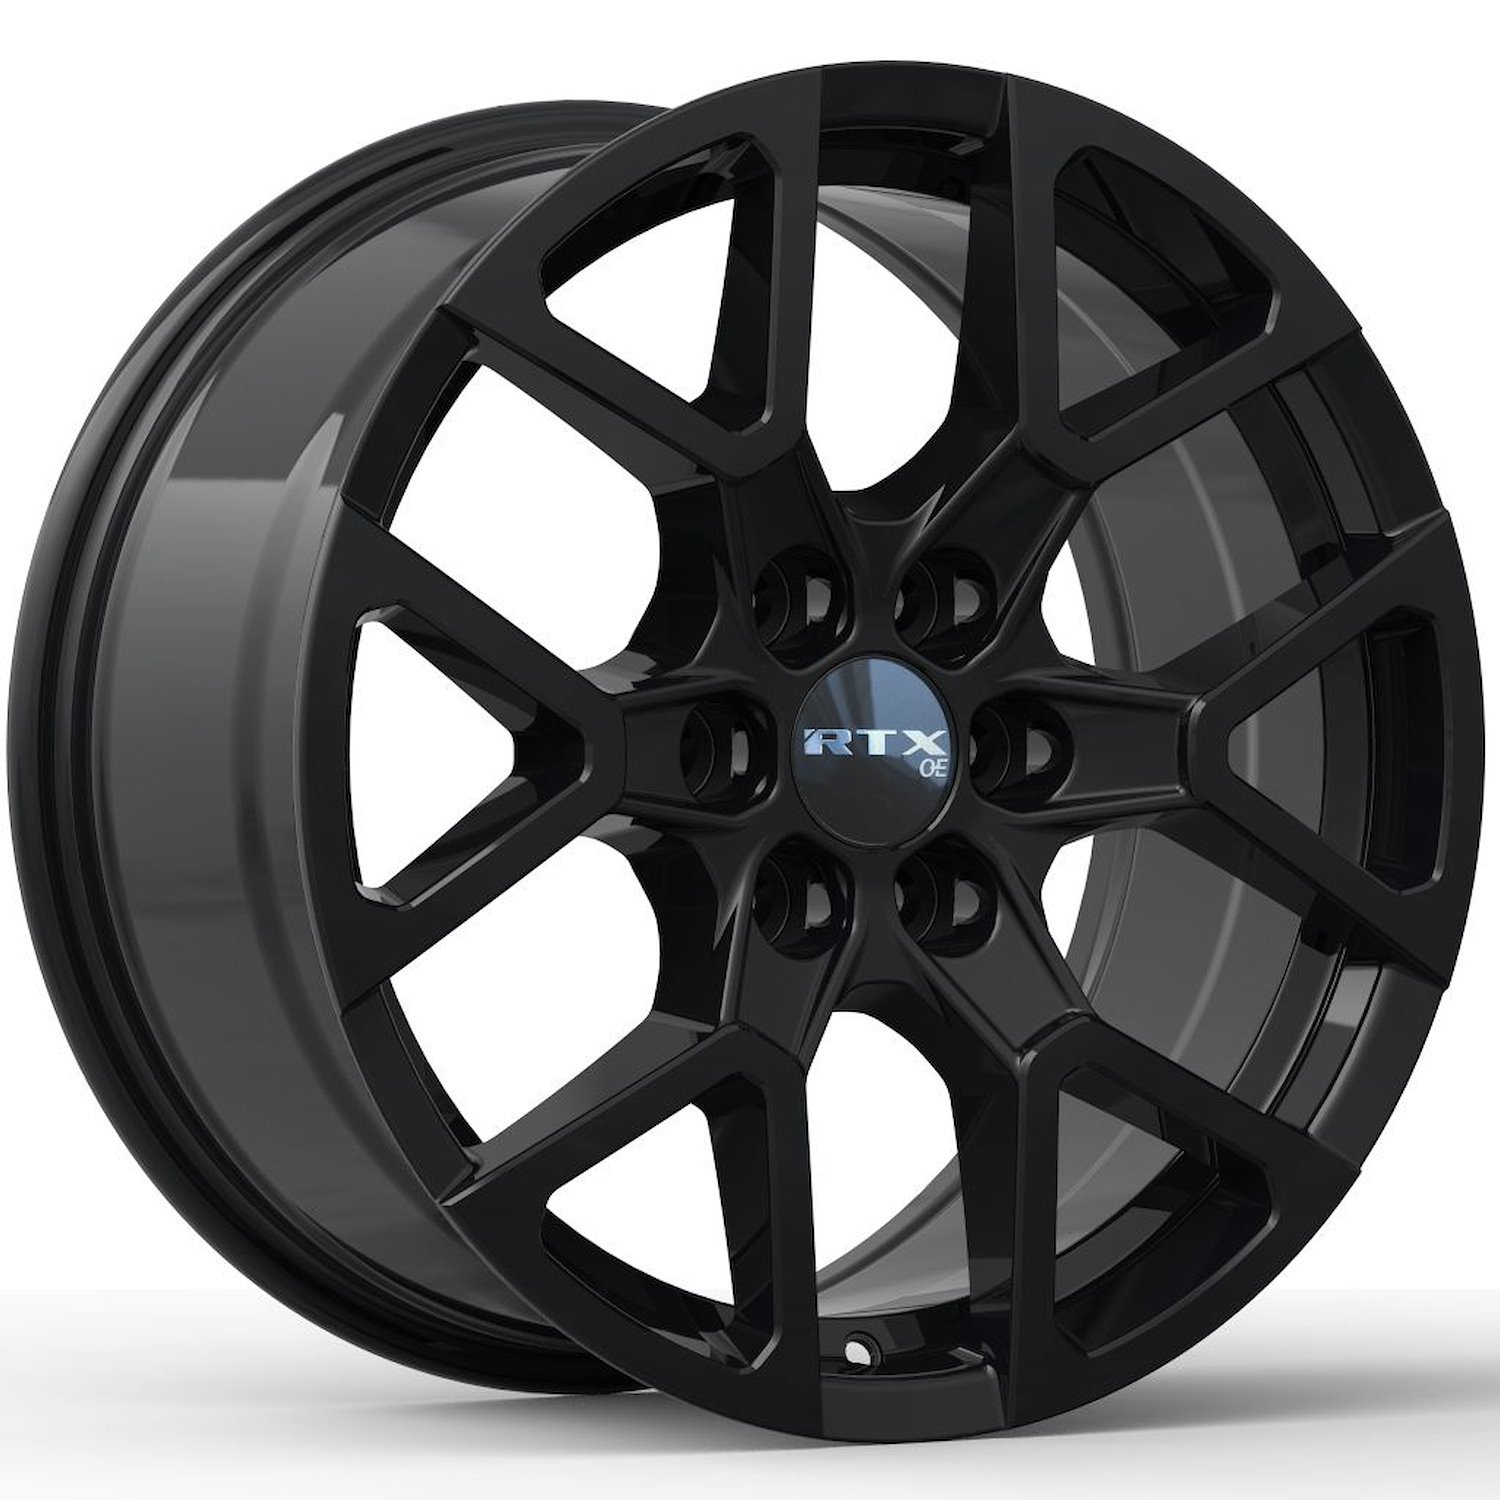 083237 OE-Series GM-02 Wheel [Size: 20" x 8.50"] Gloss Black Finish